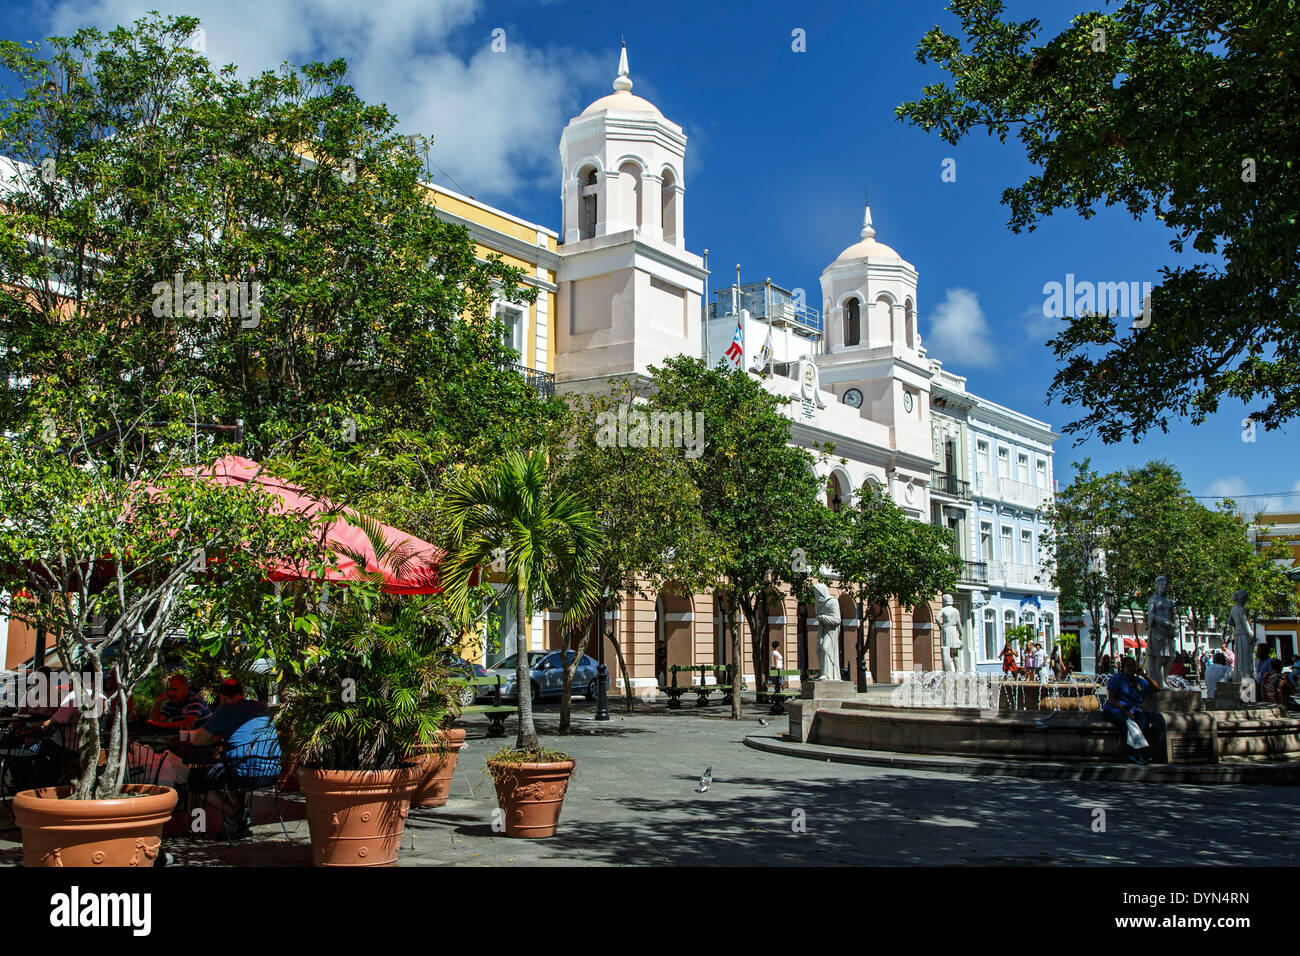 Plaza san juan puerto rico fotografías e imágenes de alta resolución - Alamy